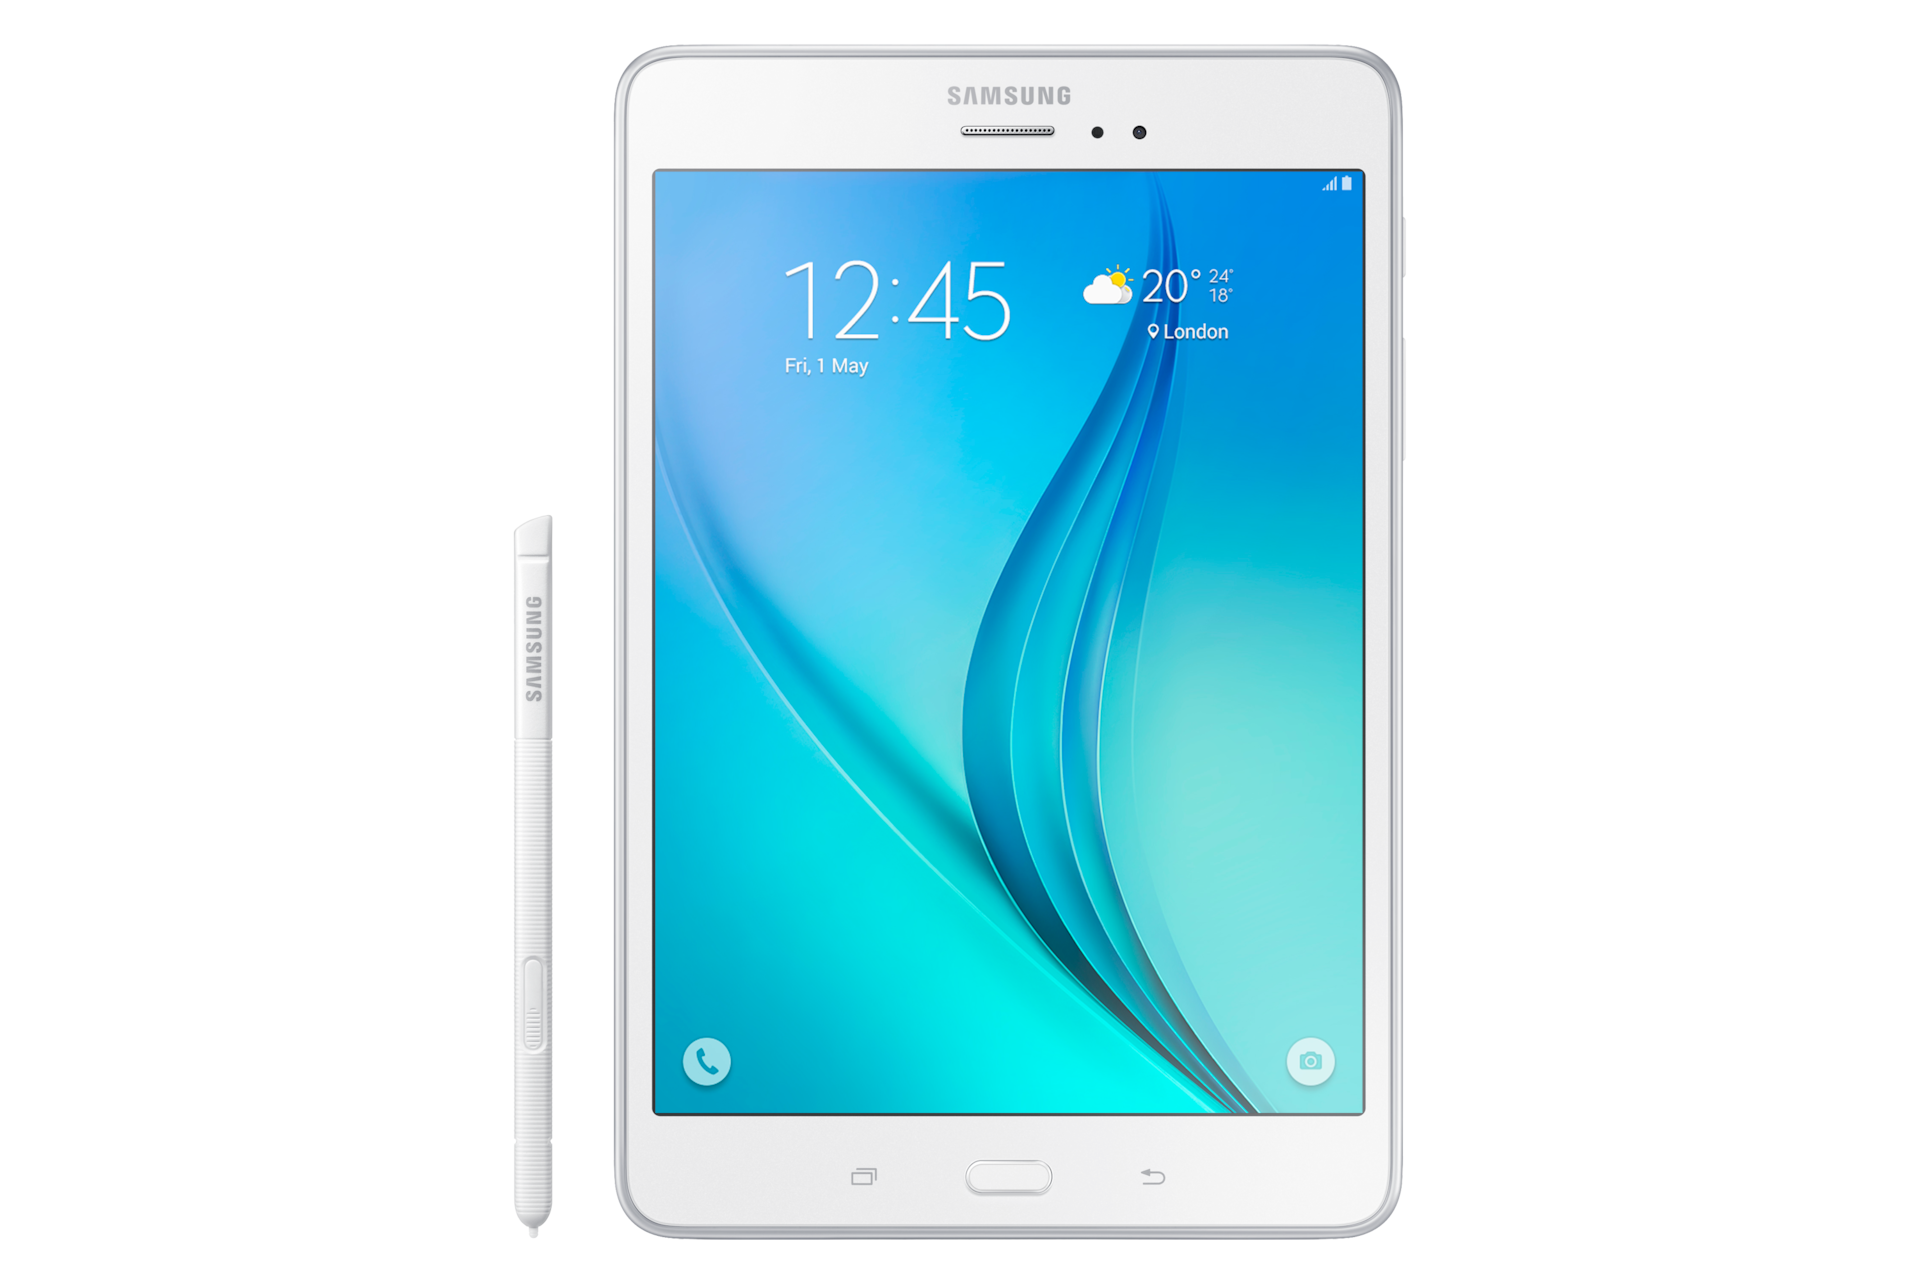 Samsung Galaxy Tab A 8.0 (S Pen,4G LTE) Price in Malaysia